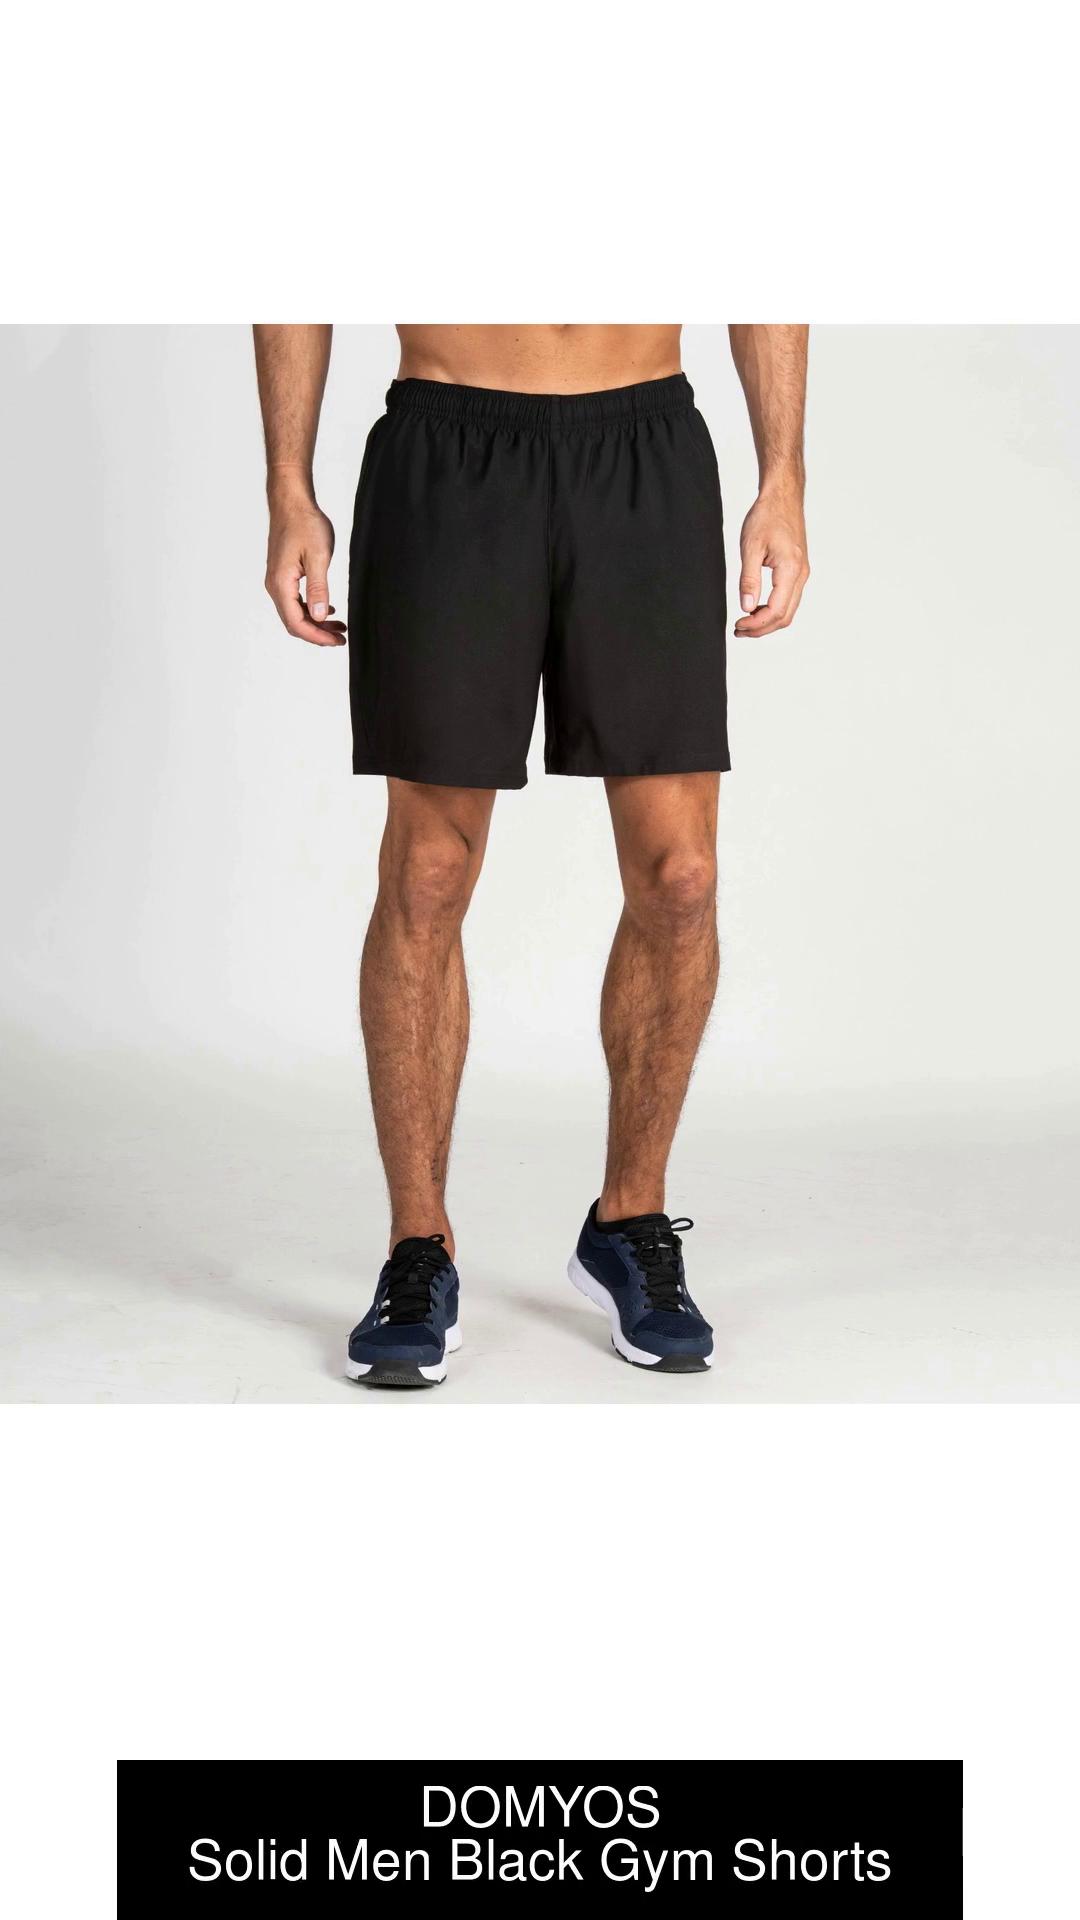 DOMYOS by Decathlon Solid Men Black Gym Shorts - Buy